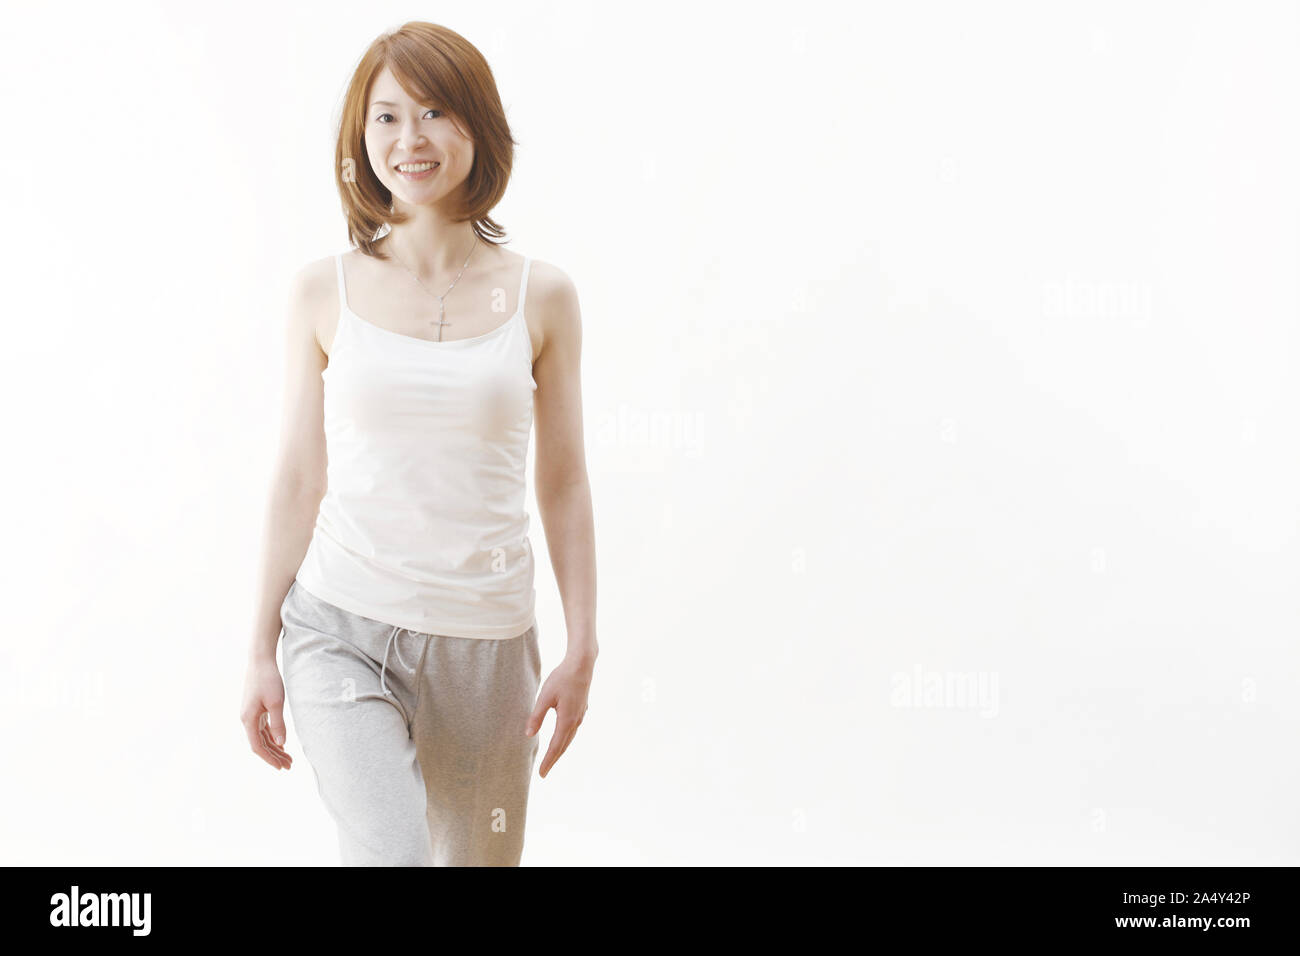 Beautiful young woman (model) poses in studio wearing white tank top Stock Photo